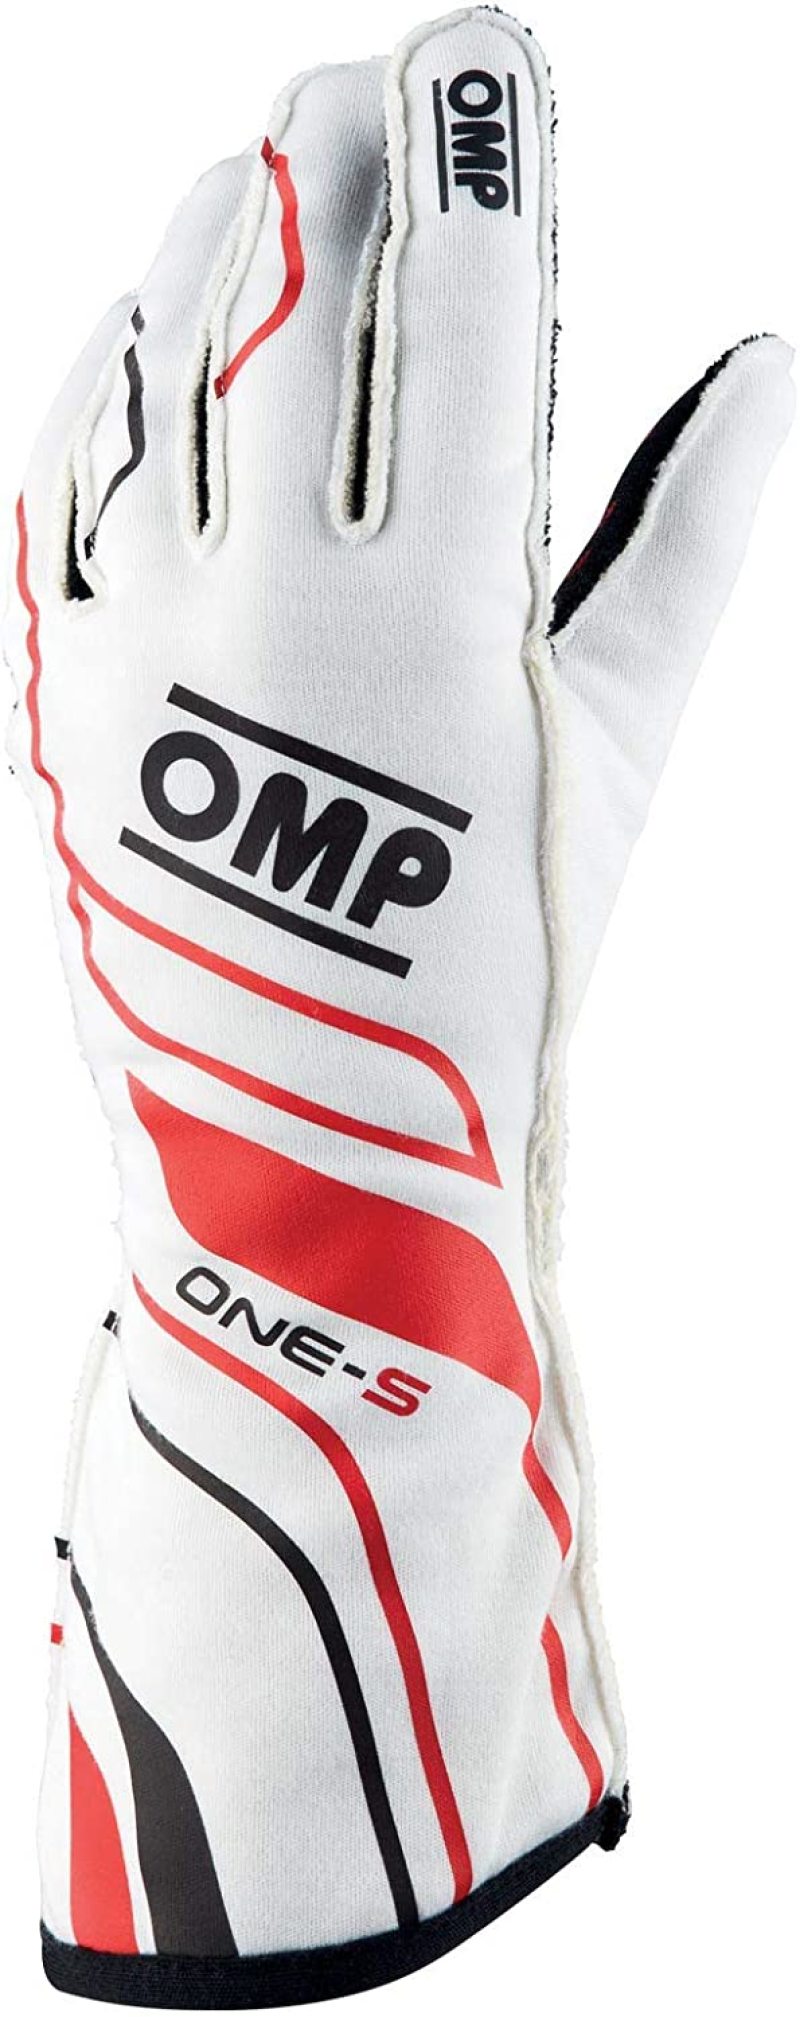 OMP One-S Gloves White - Size Xs Fia 8556-2018 - IB0-0770-A01-020-XS